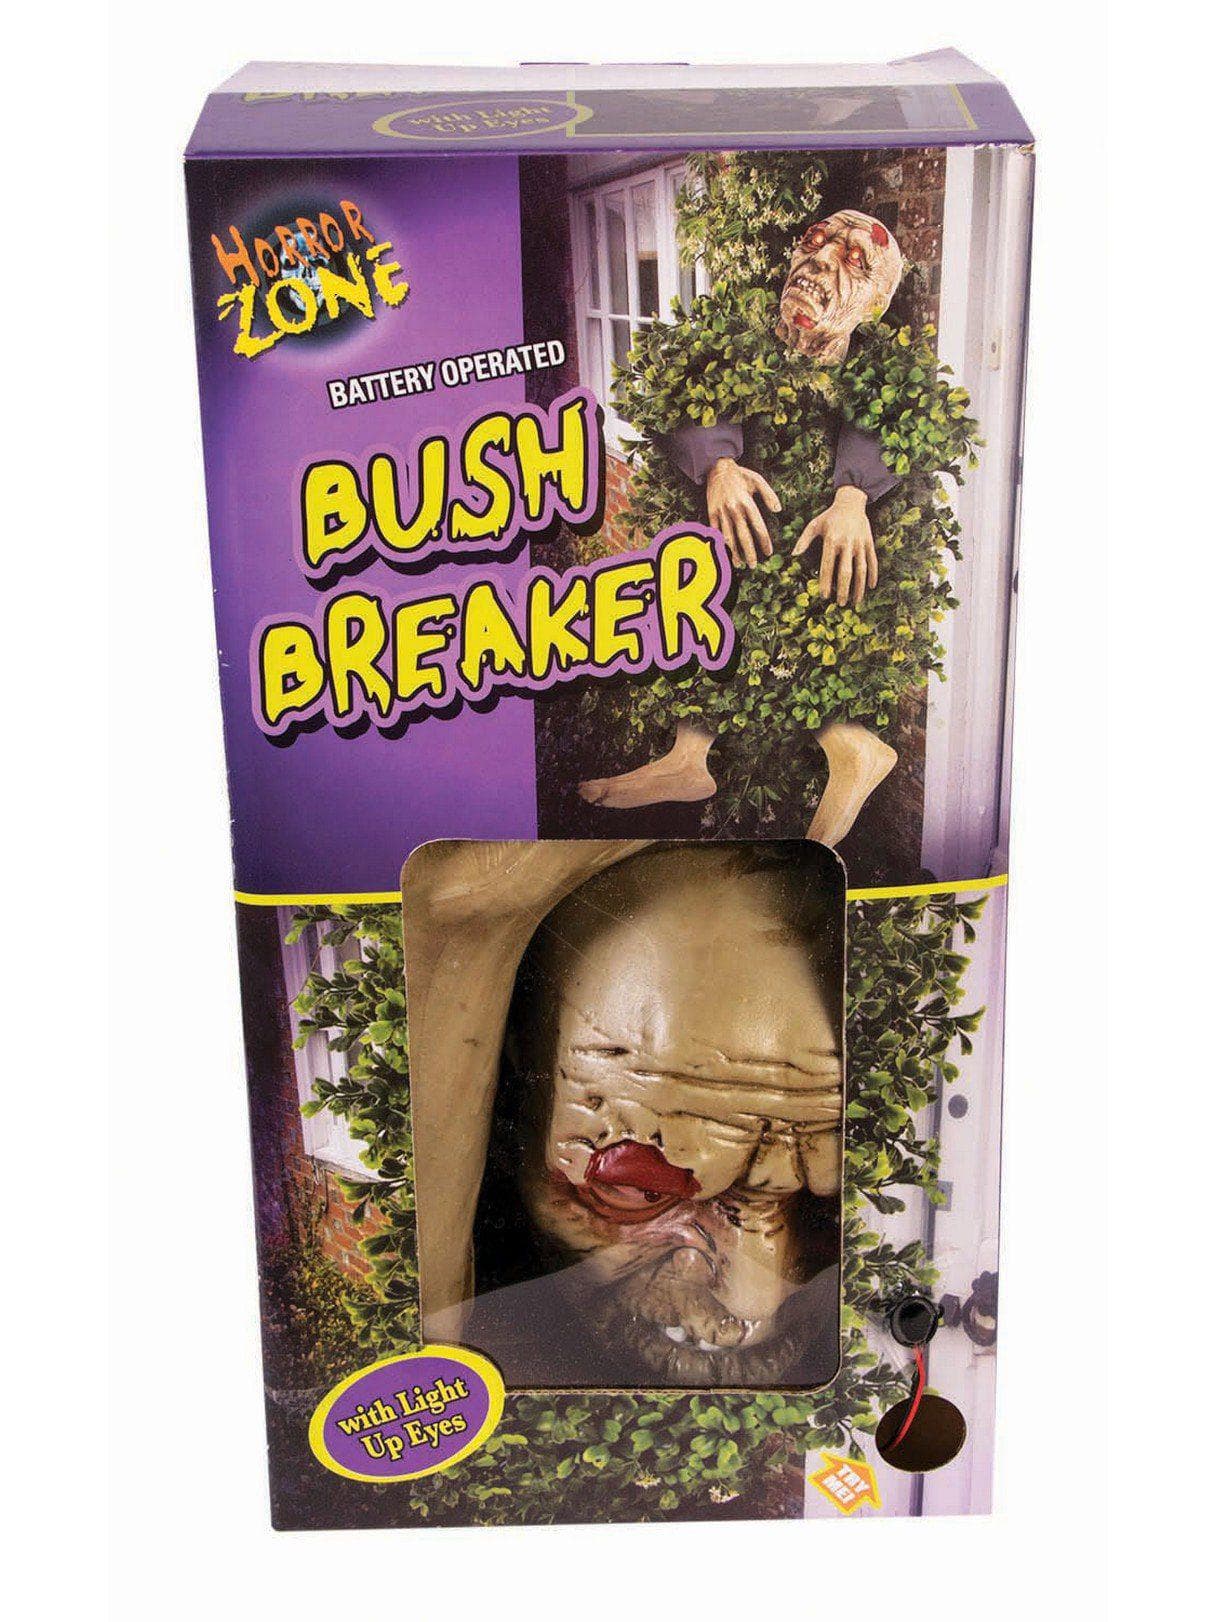 Zombie Bush Breaker - costumes.com